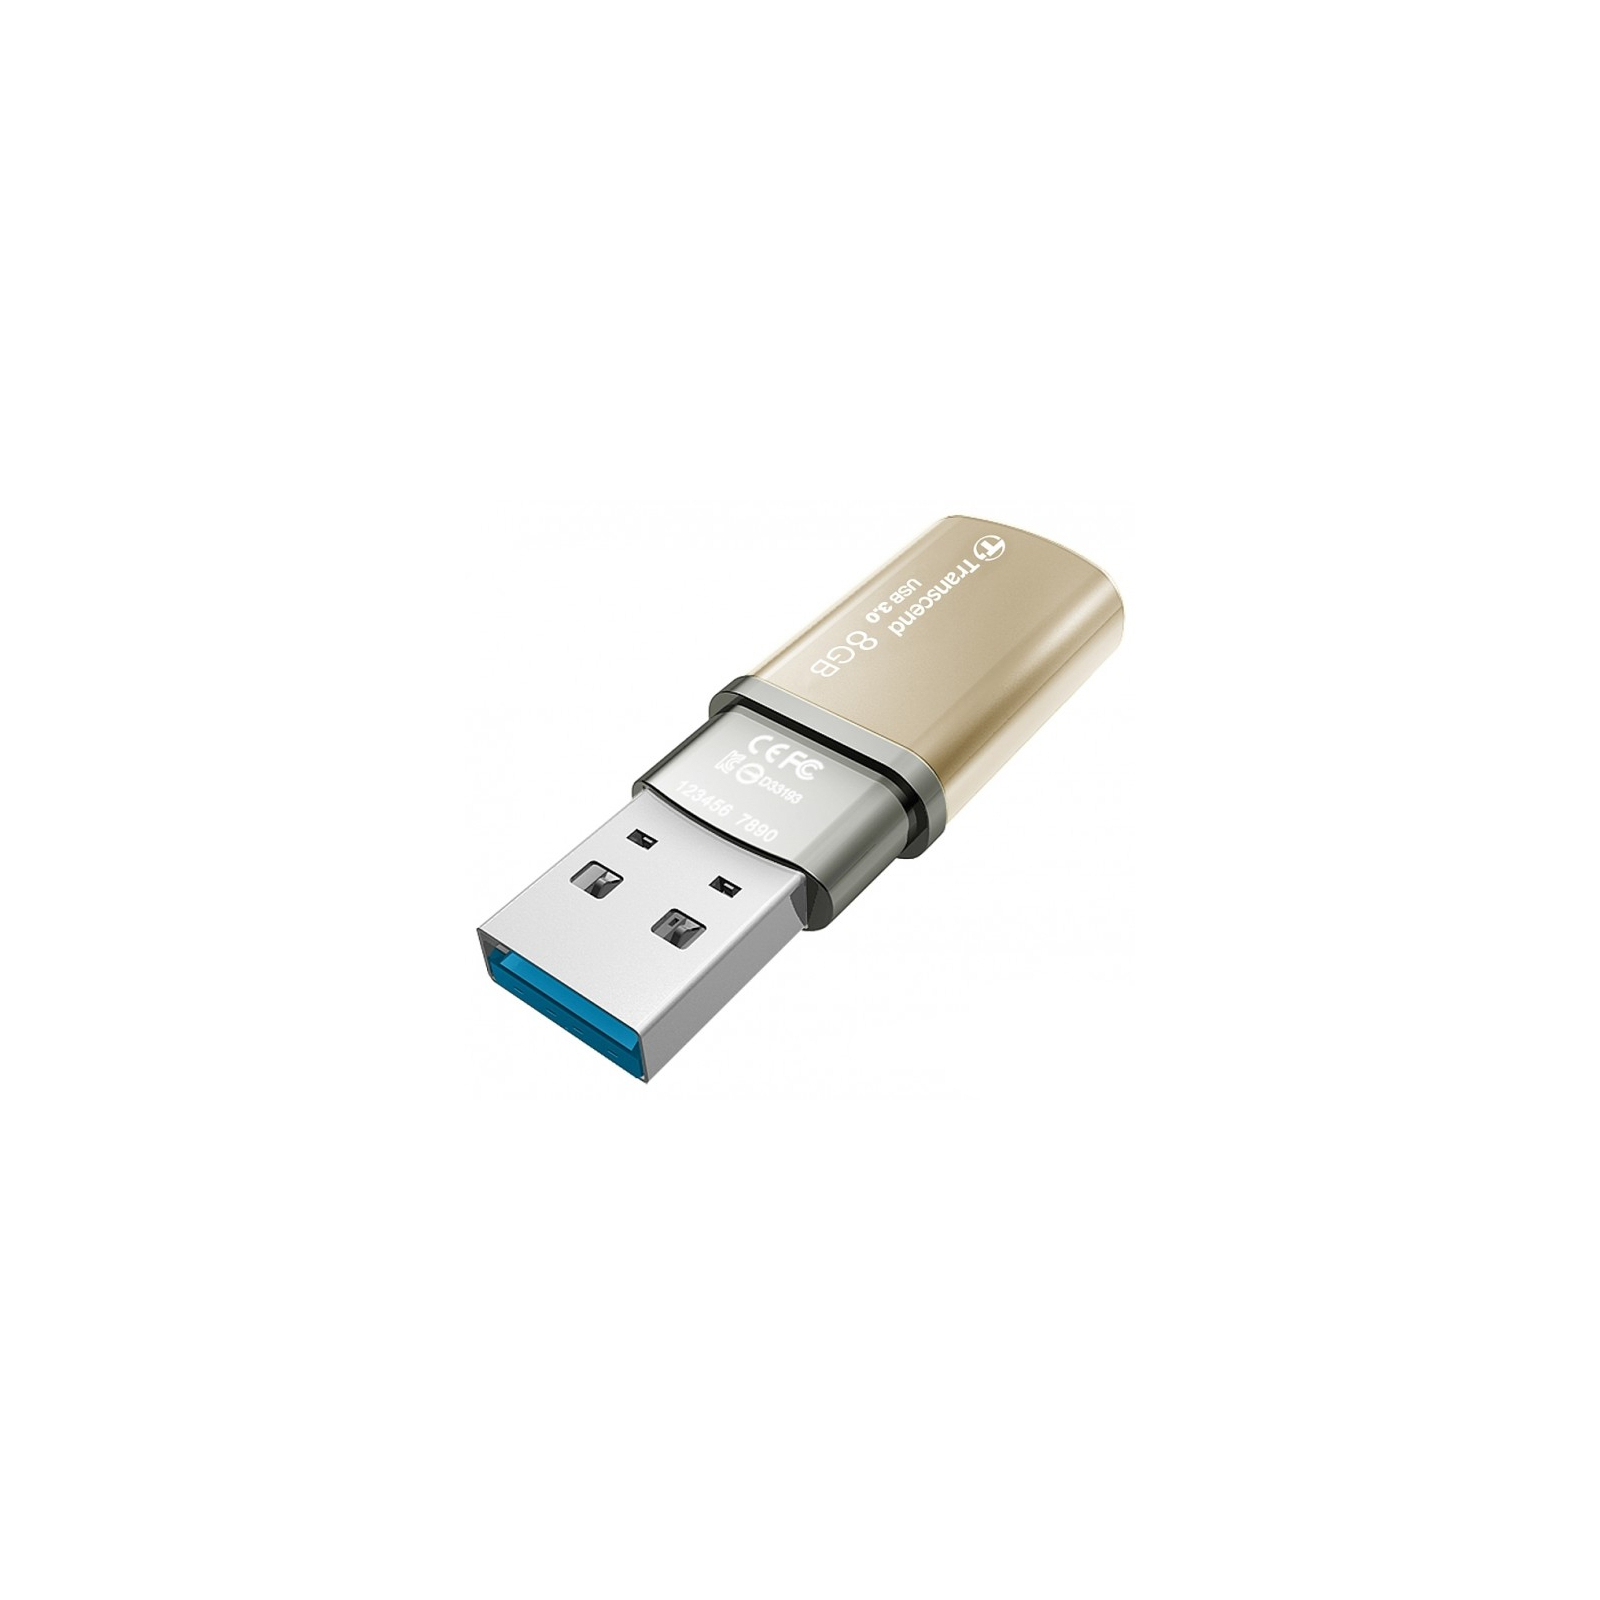 USB флеш накопитель Transcend 8GB JetFlash 820 USB 3.0 (TS8GJF820G) изображение 3